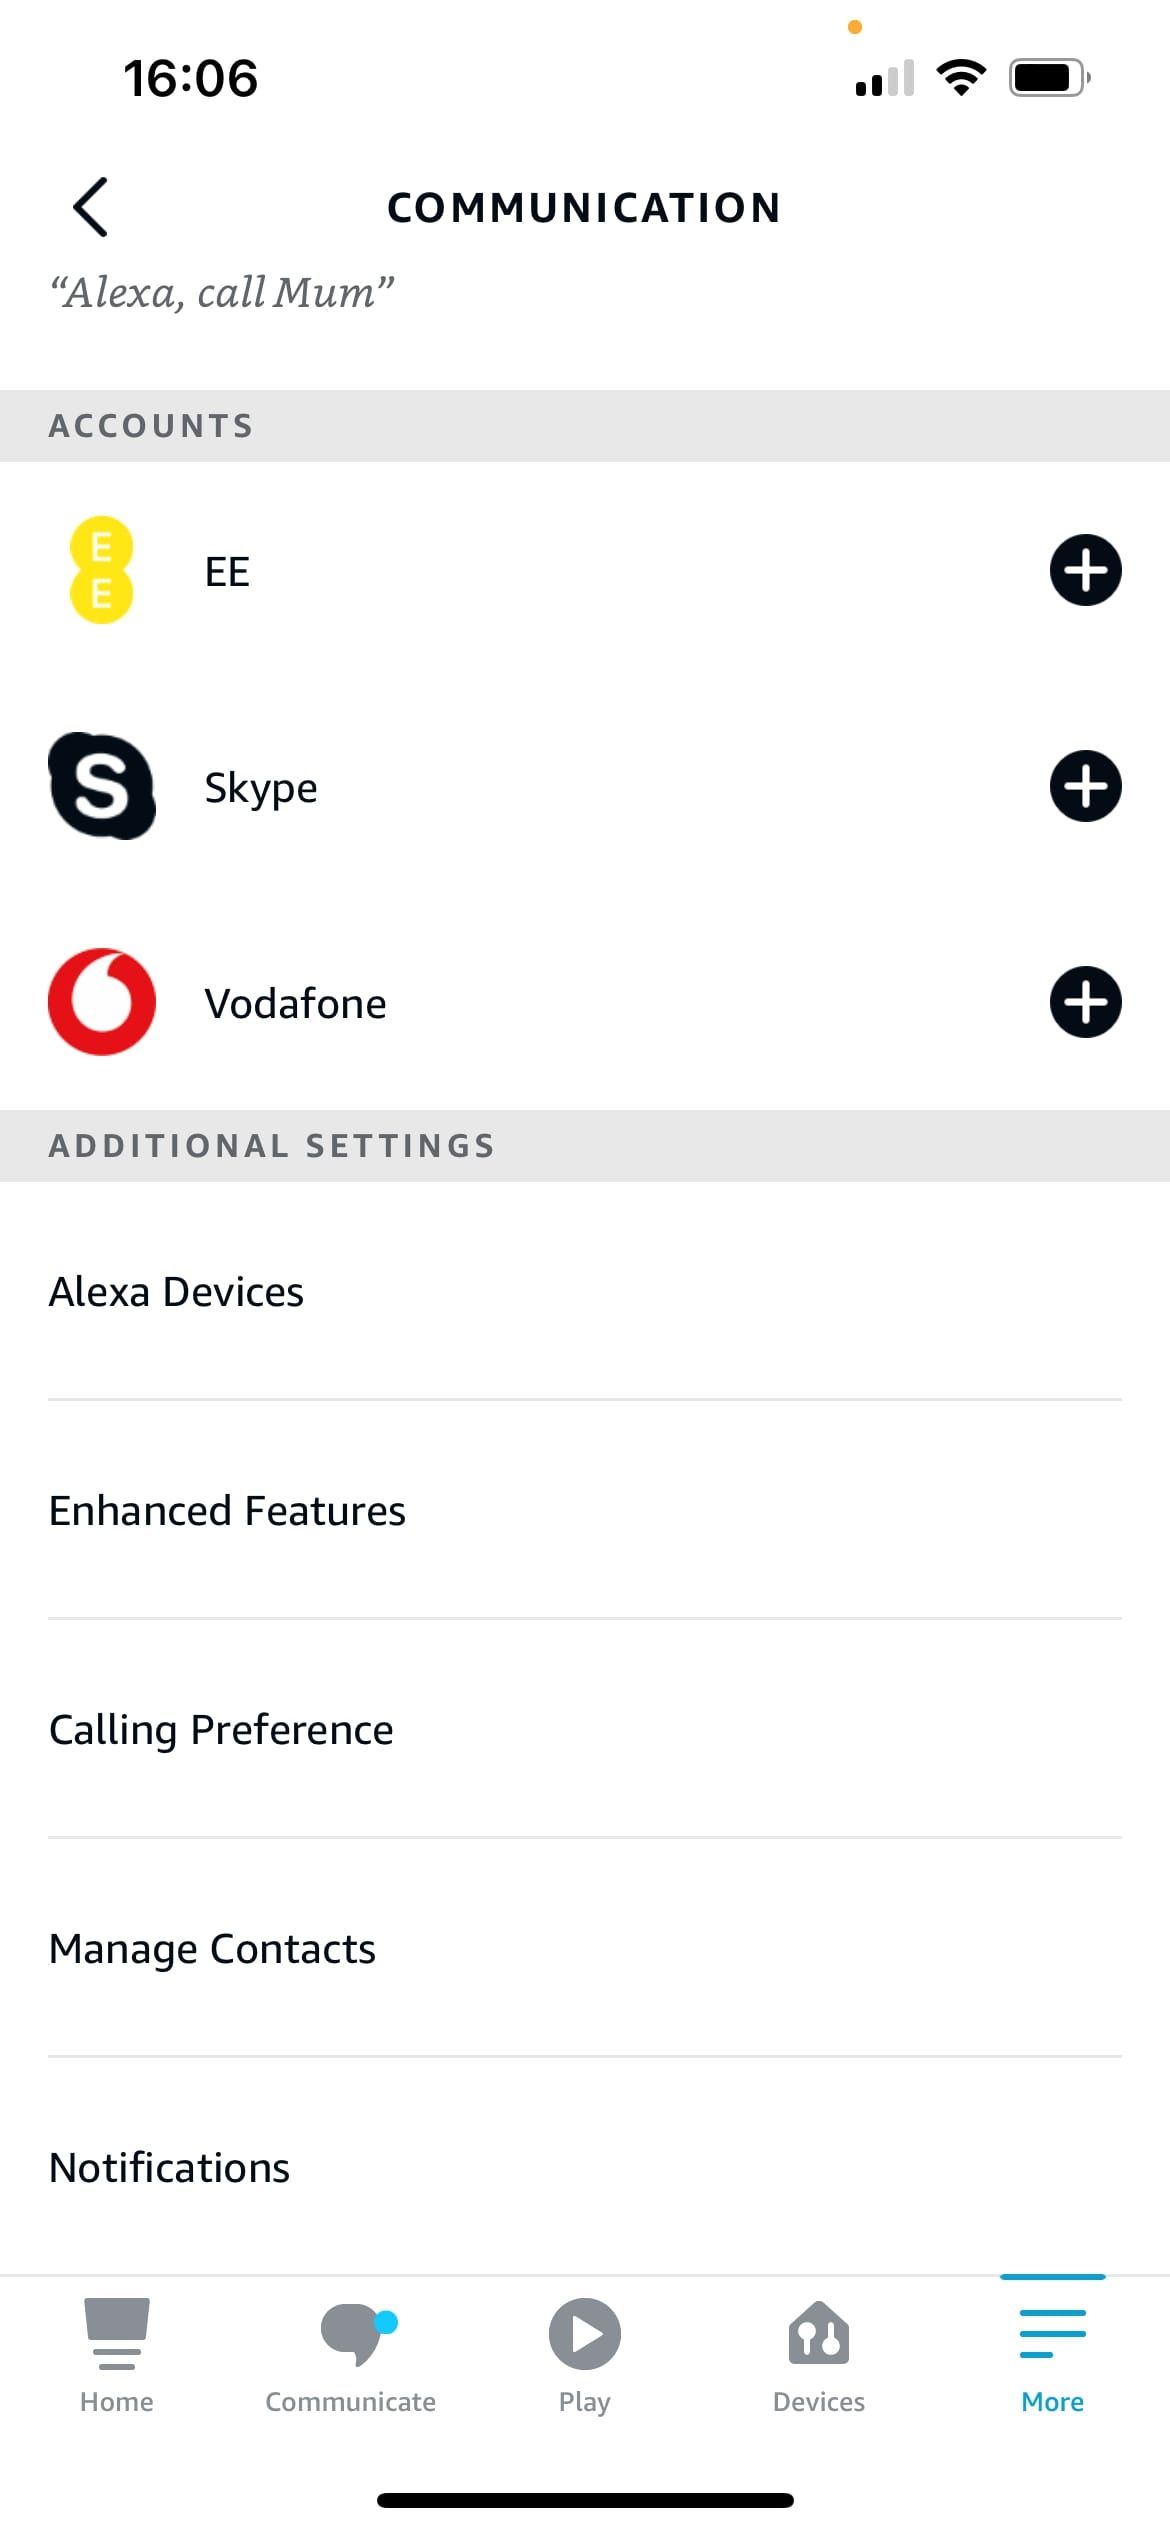 Alexa Communication settings